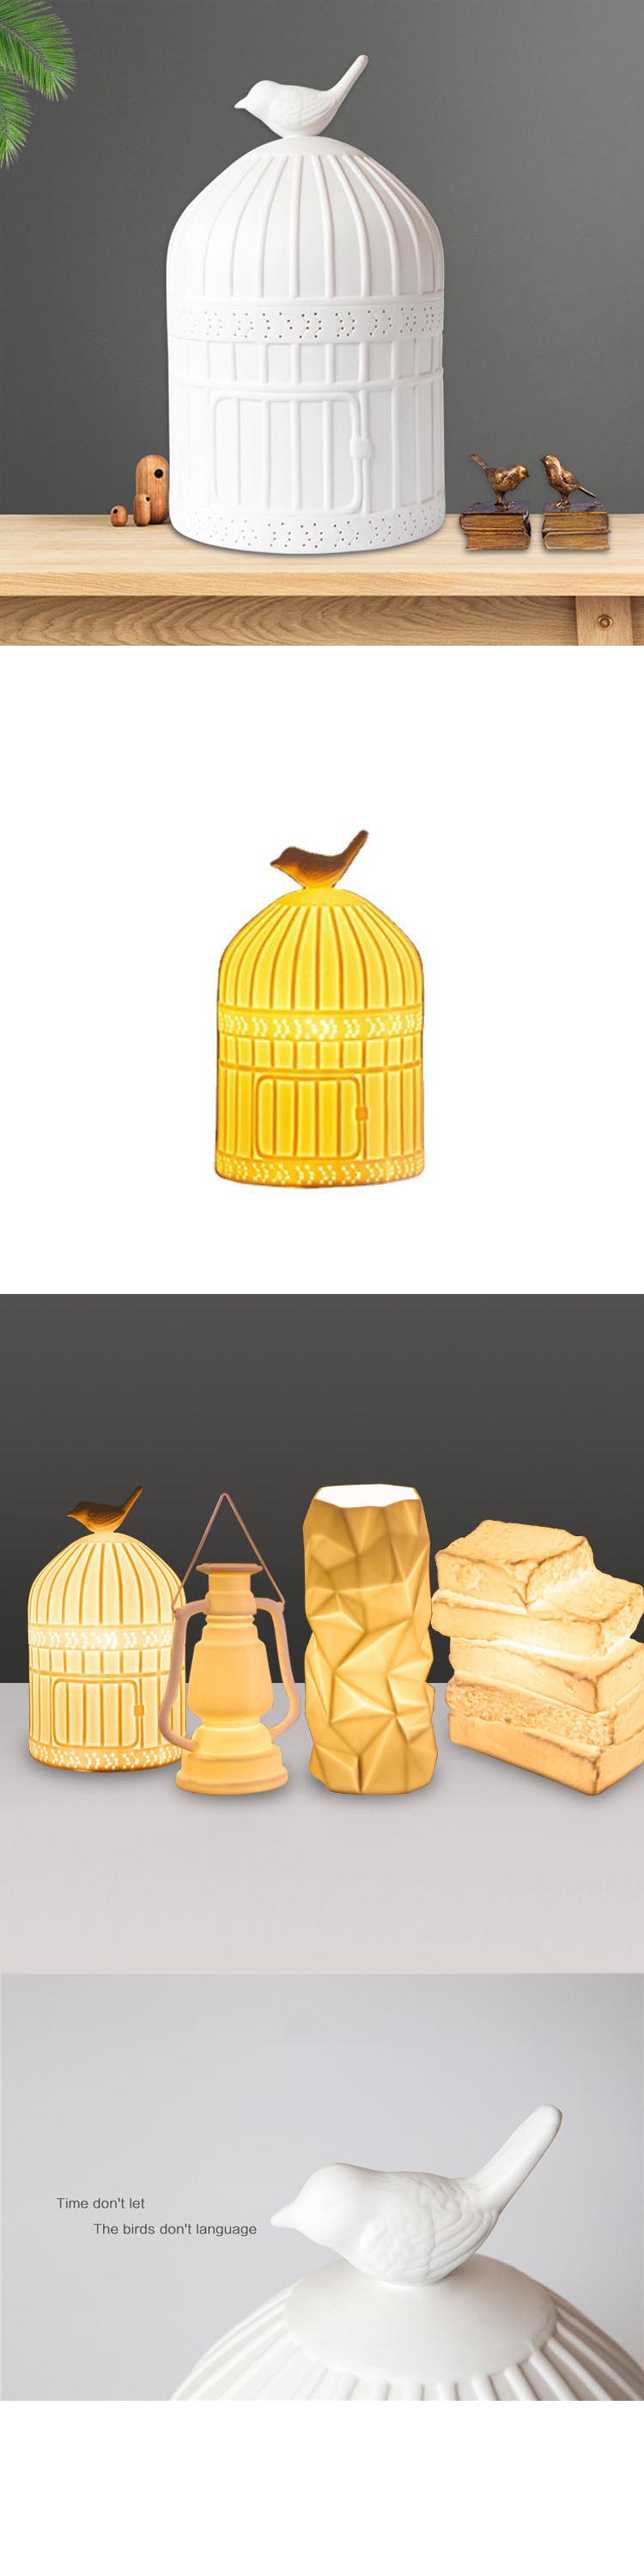 Wholesale Wedding Gift Light Home Decor Table Lamp Creative Design Birdcage Ceramic Table Lamp